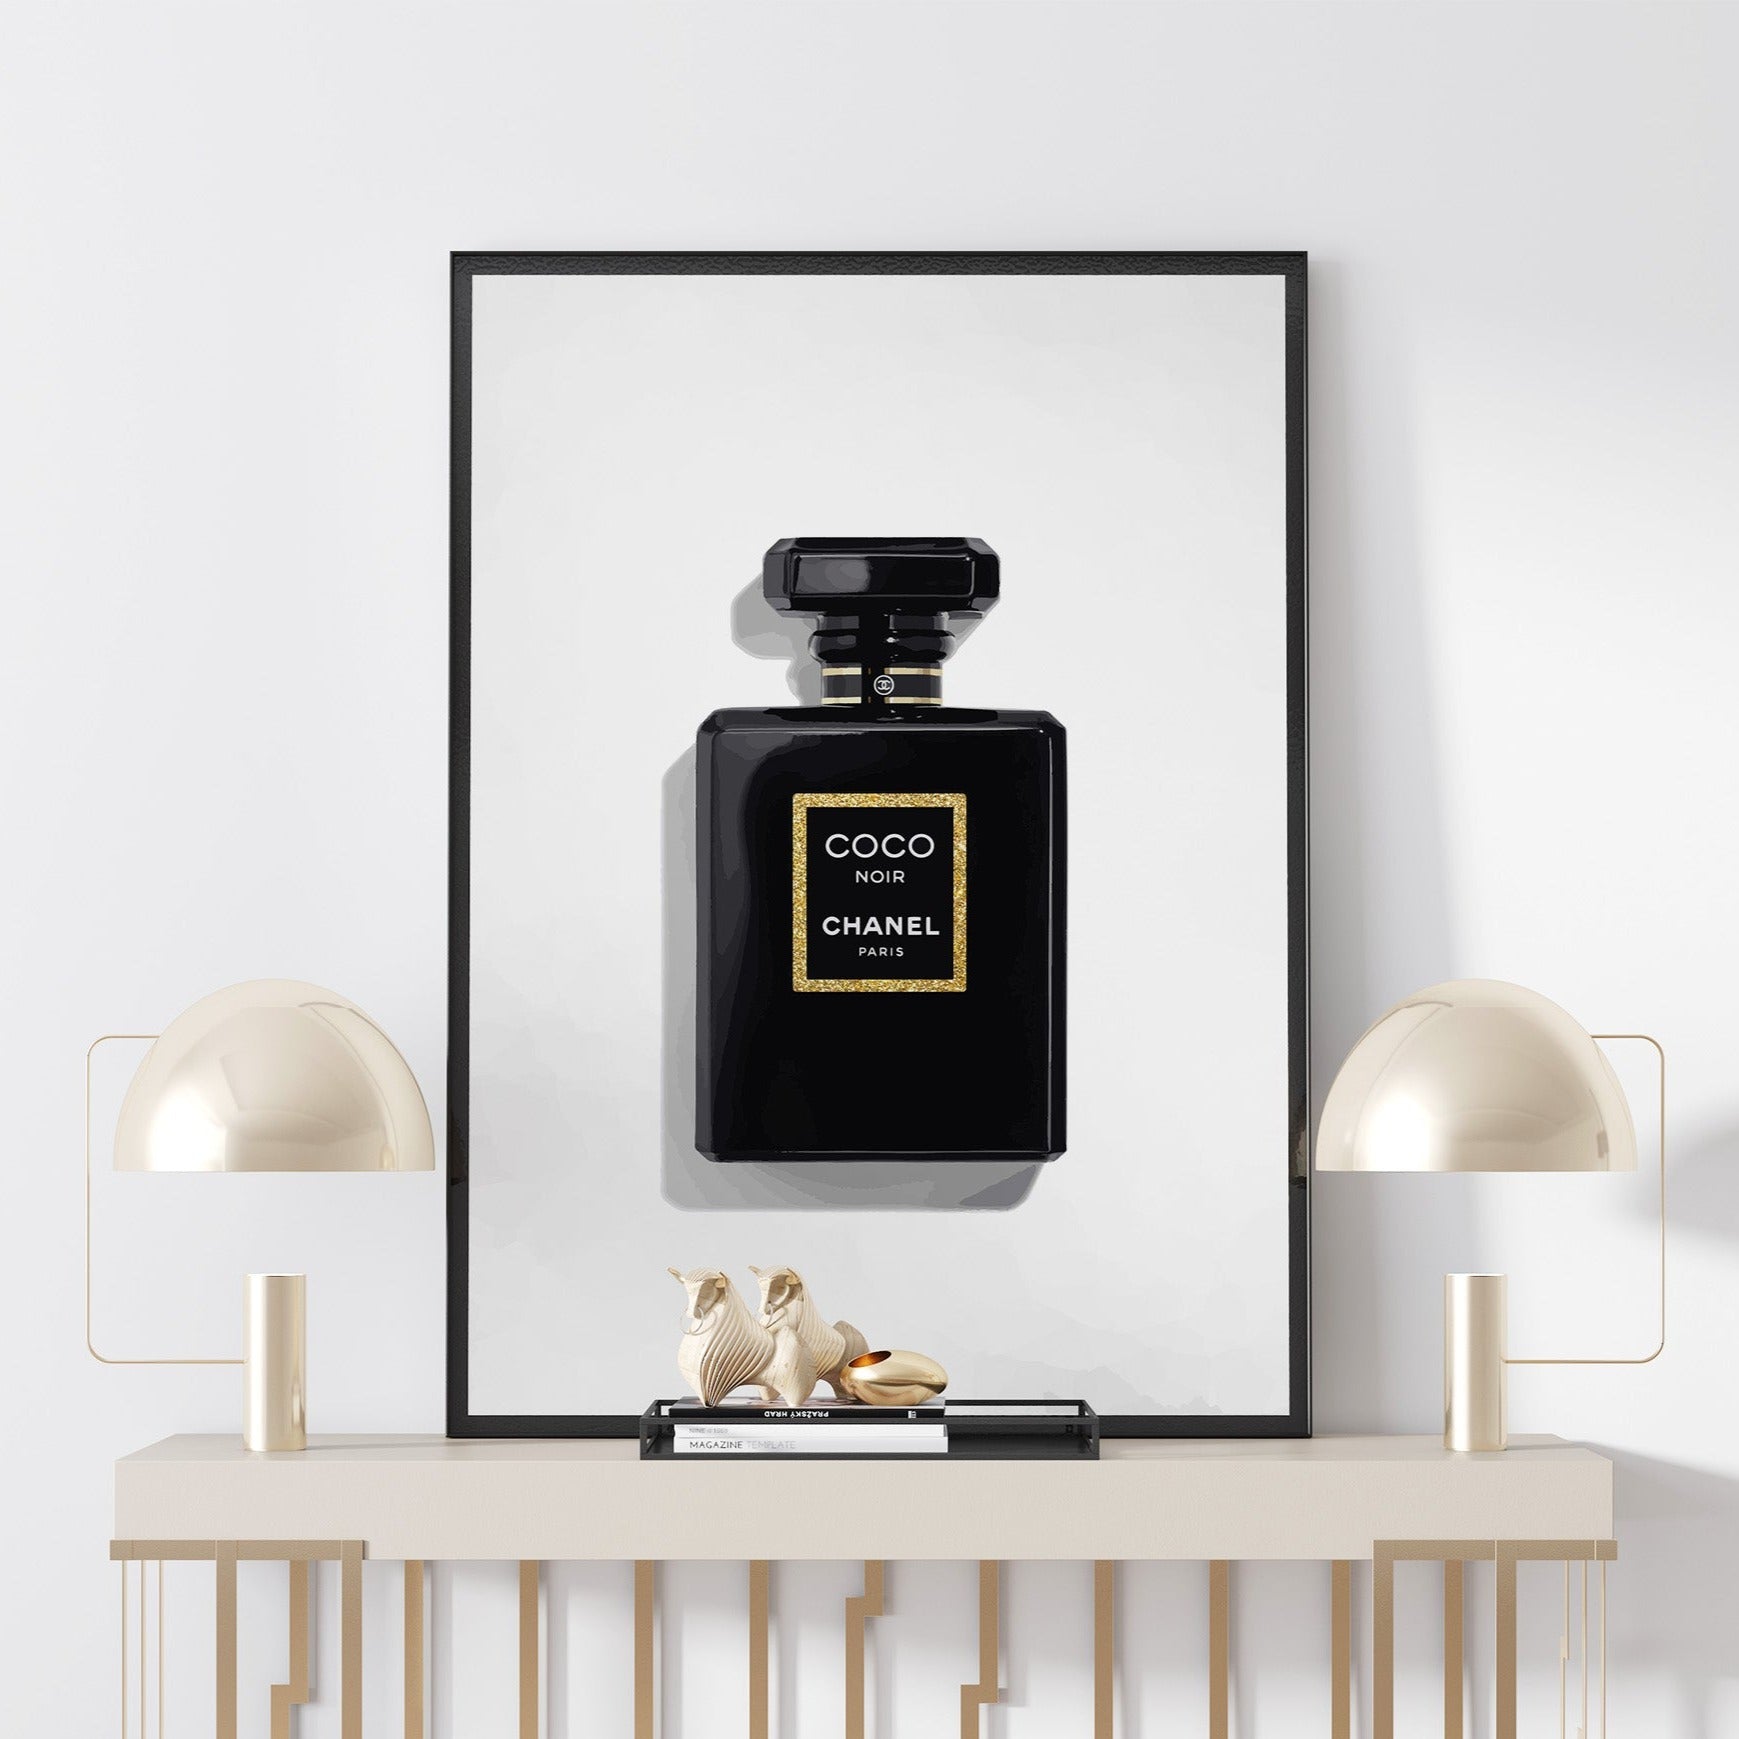 Gold Perfume Bottle Print, Chanel Coco Noir Perfume Poster